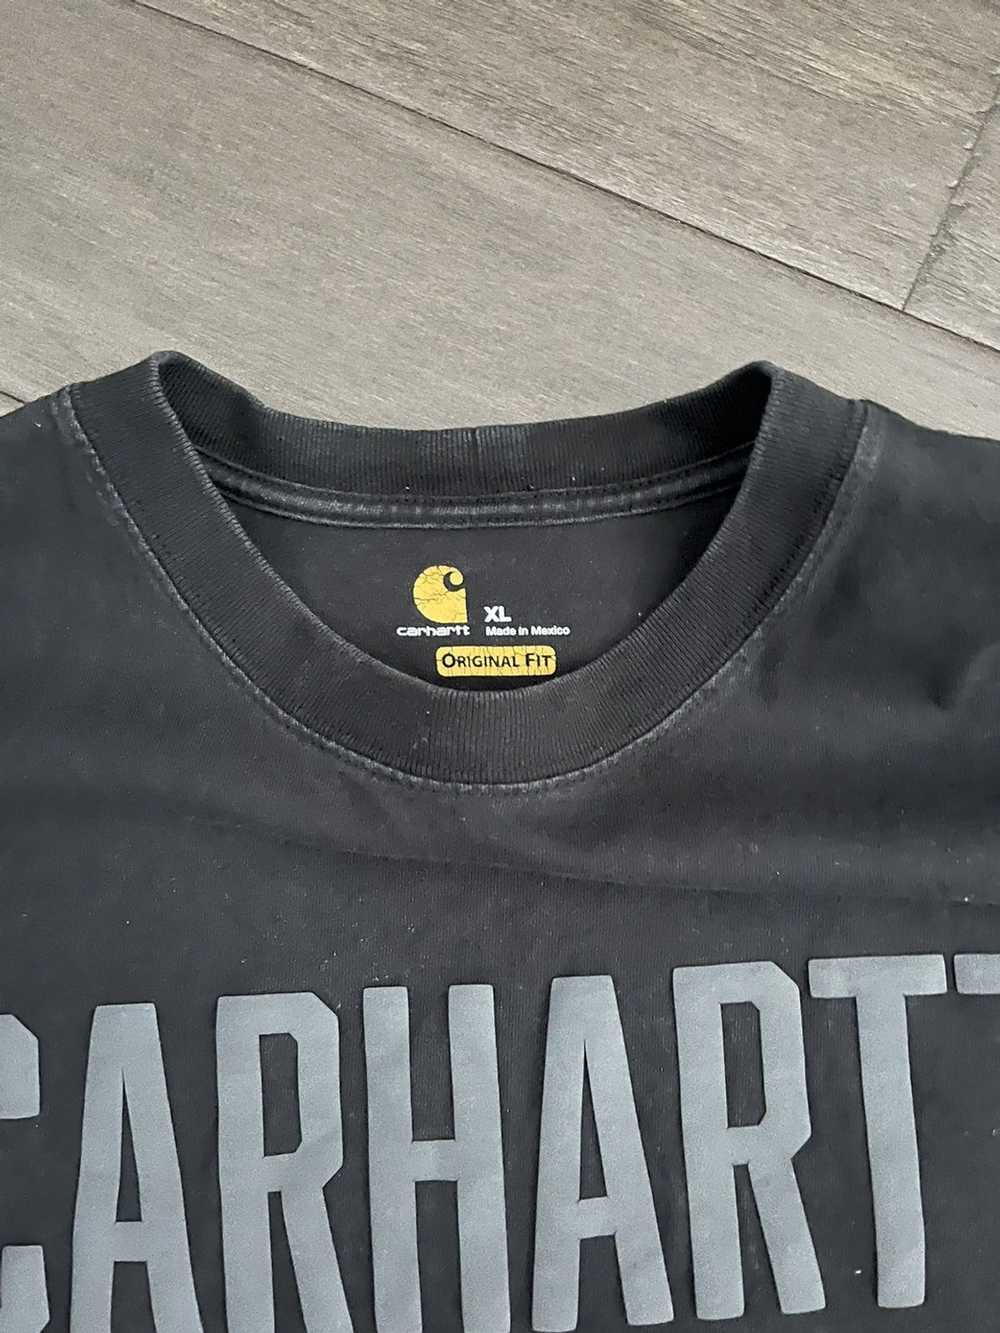 Carhartt Carhartt shirt black grey - image 3